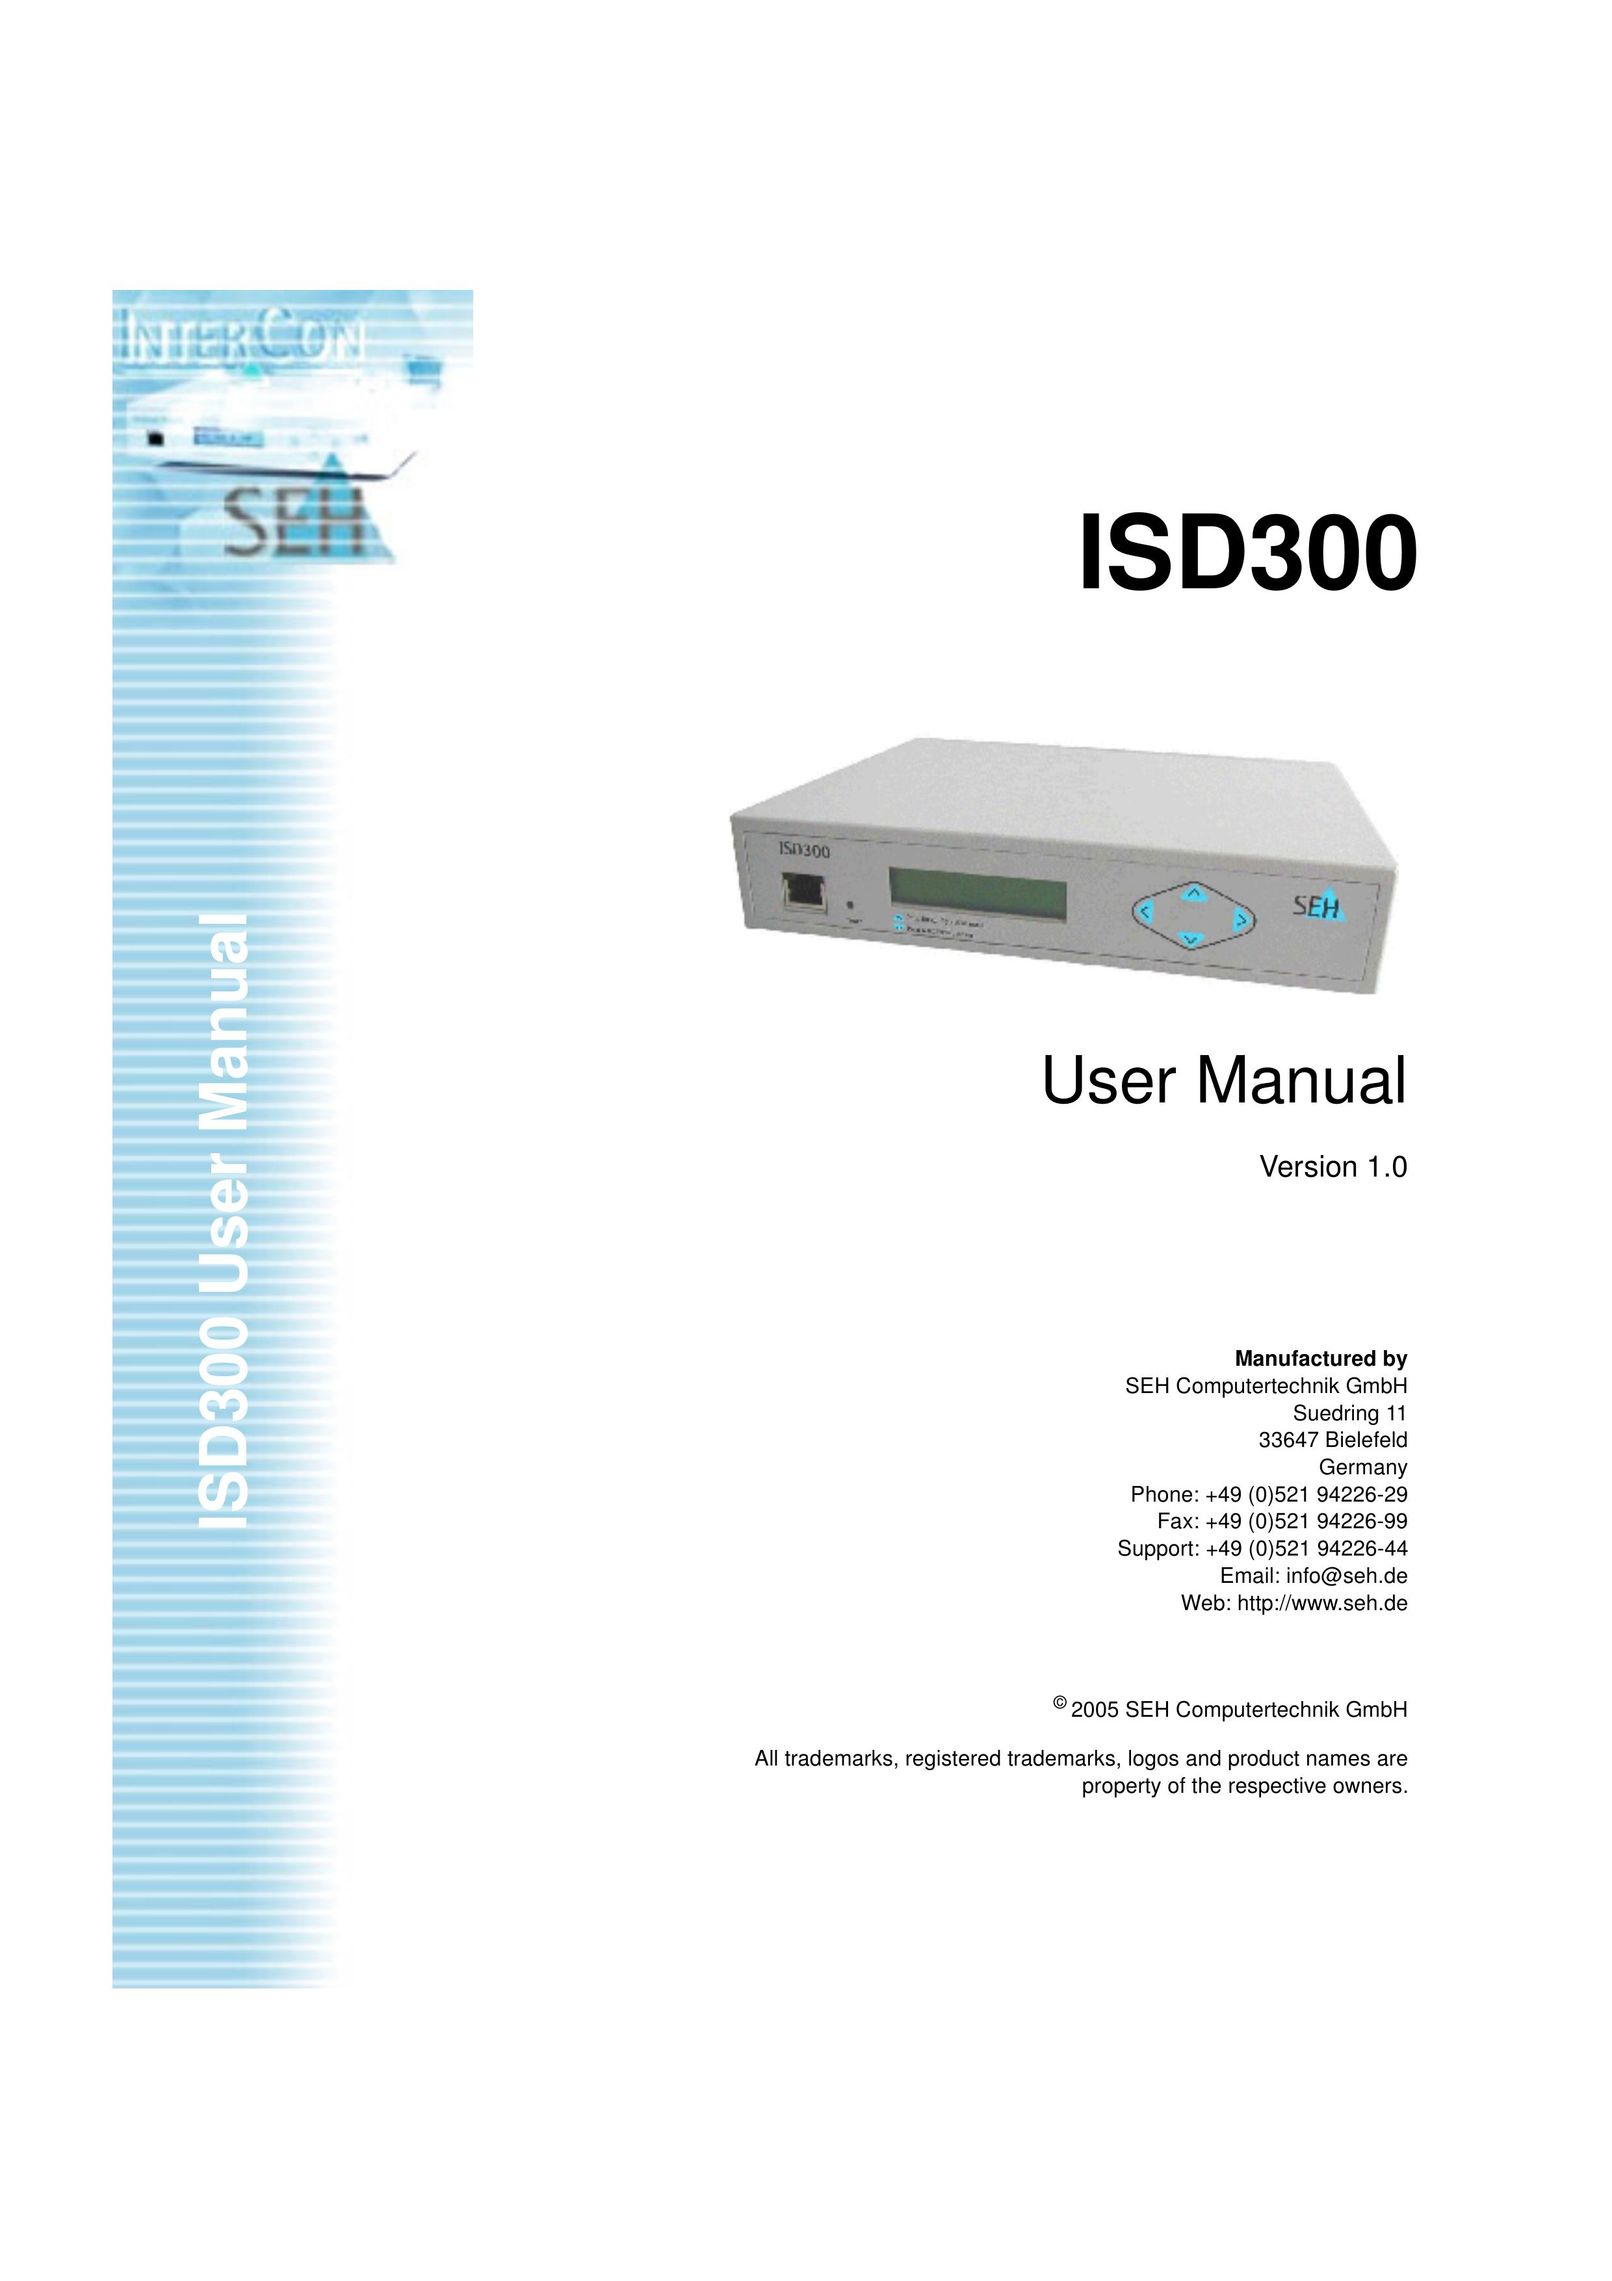 SEH Computertechnik ISD300 Network Card User Manual